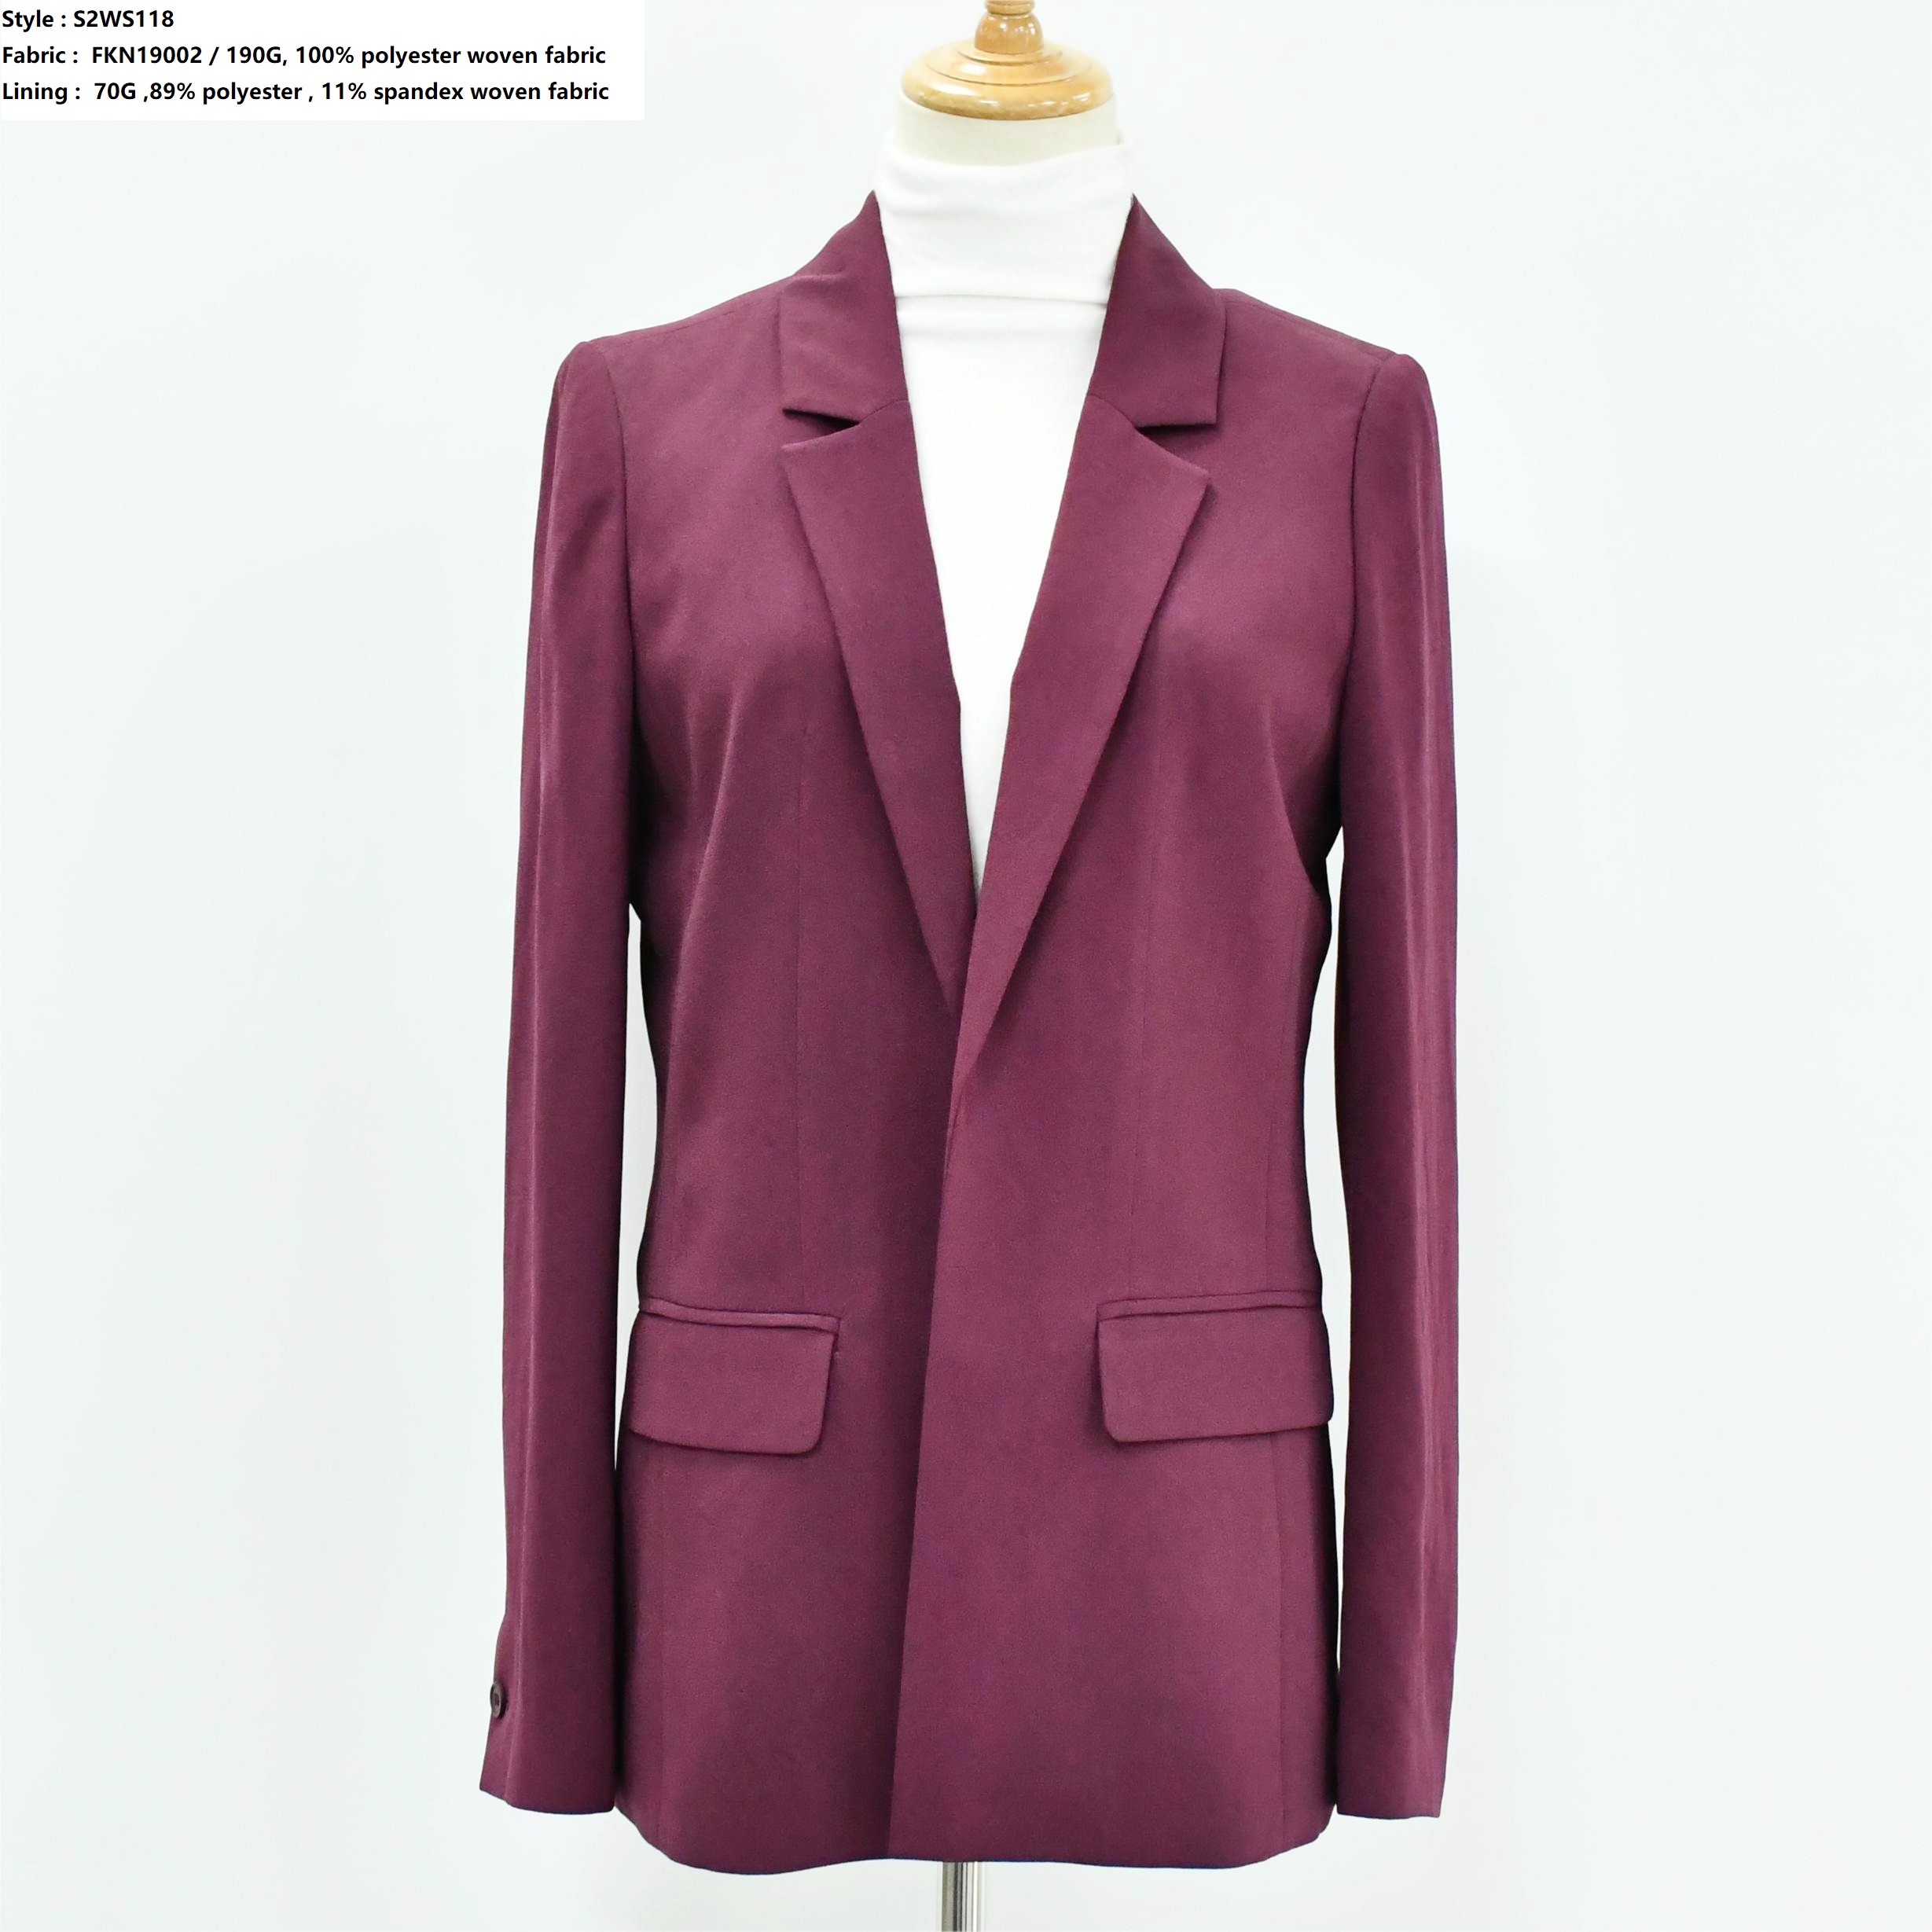 Women’s Woven Suit Jacket